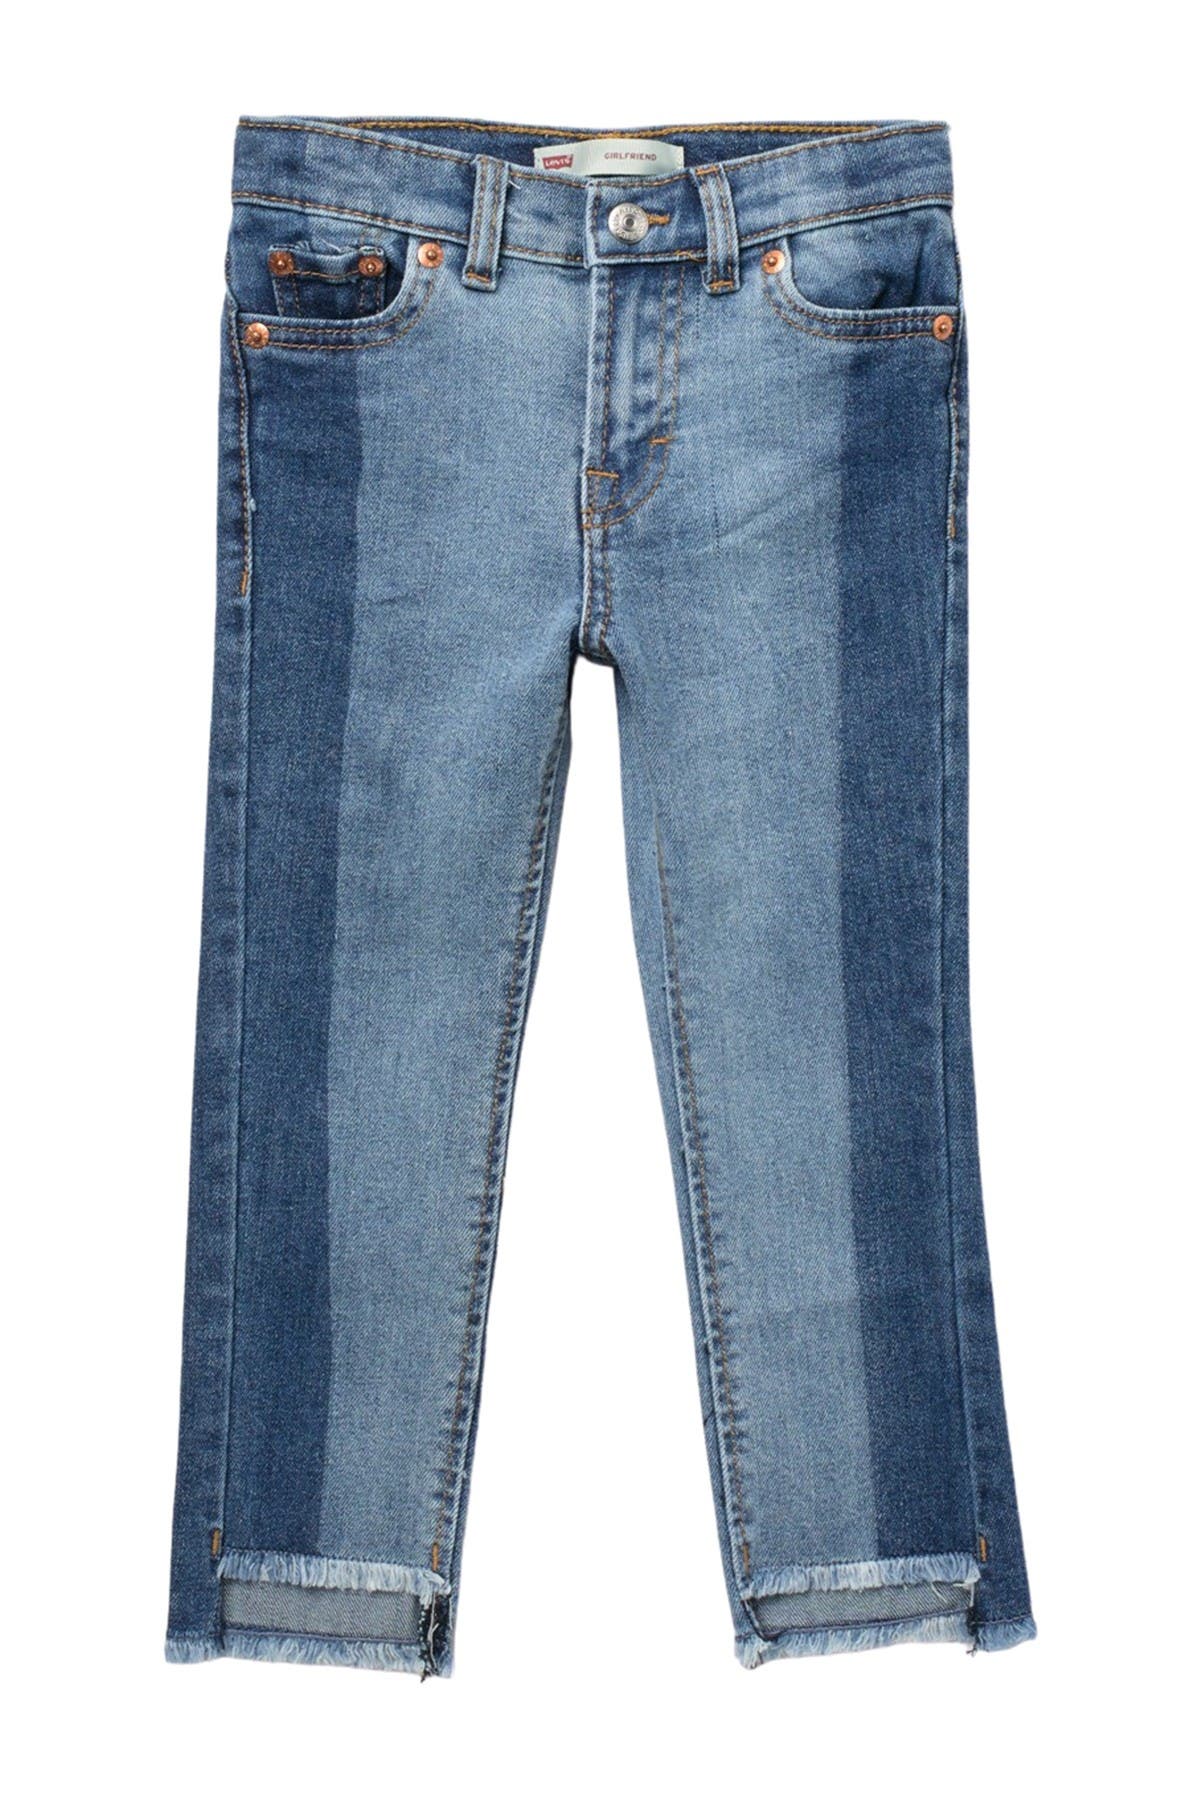 true religion jeans selfridges